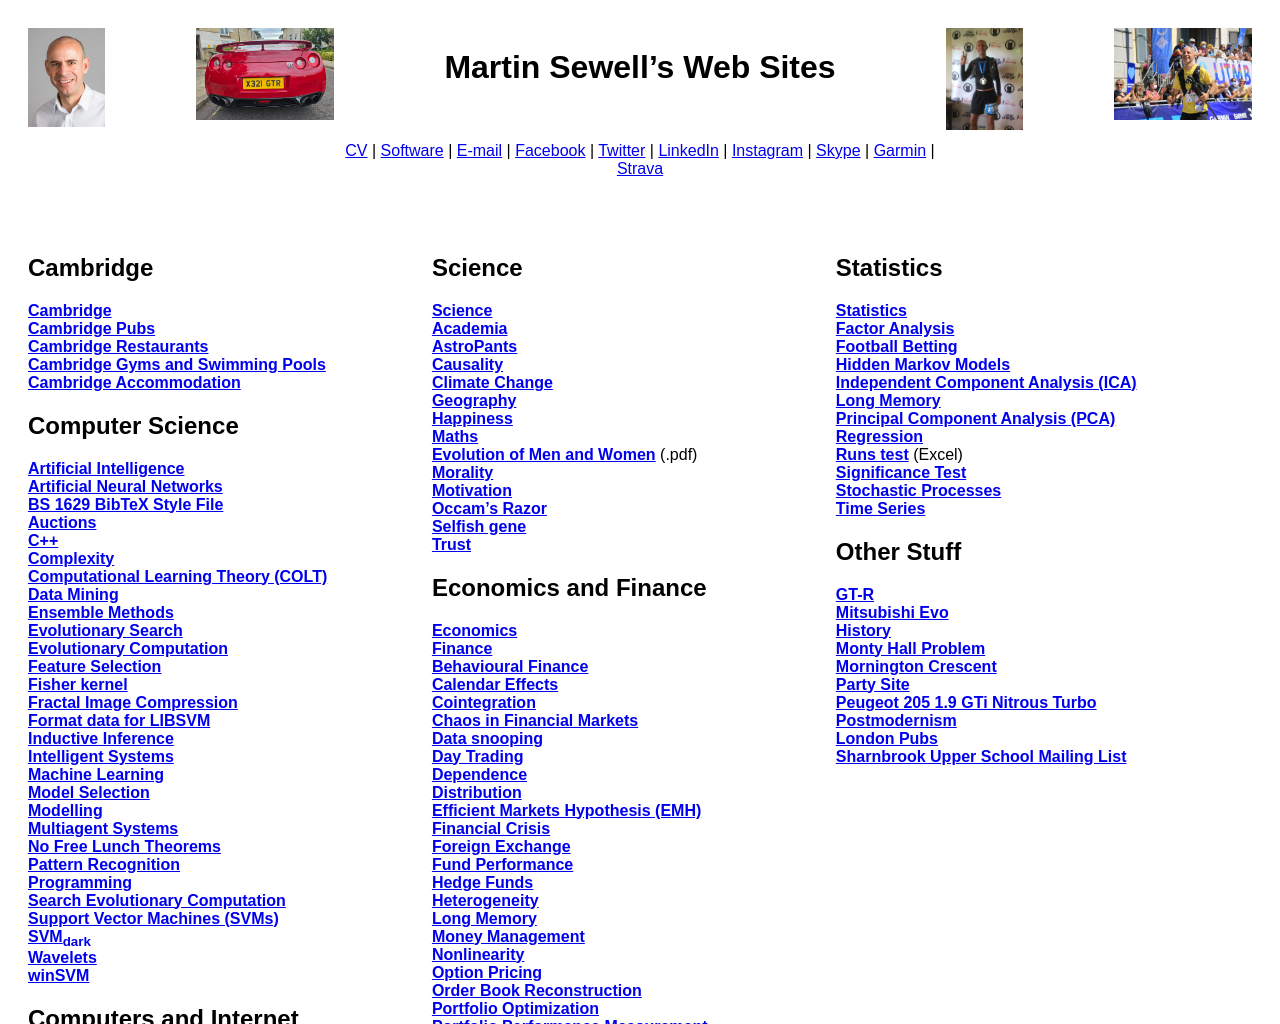 martinsewell.com